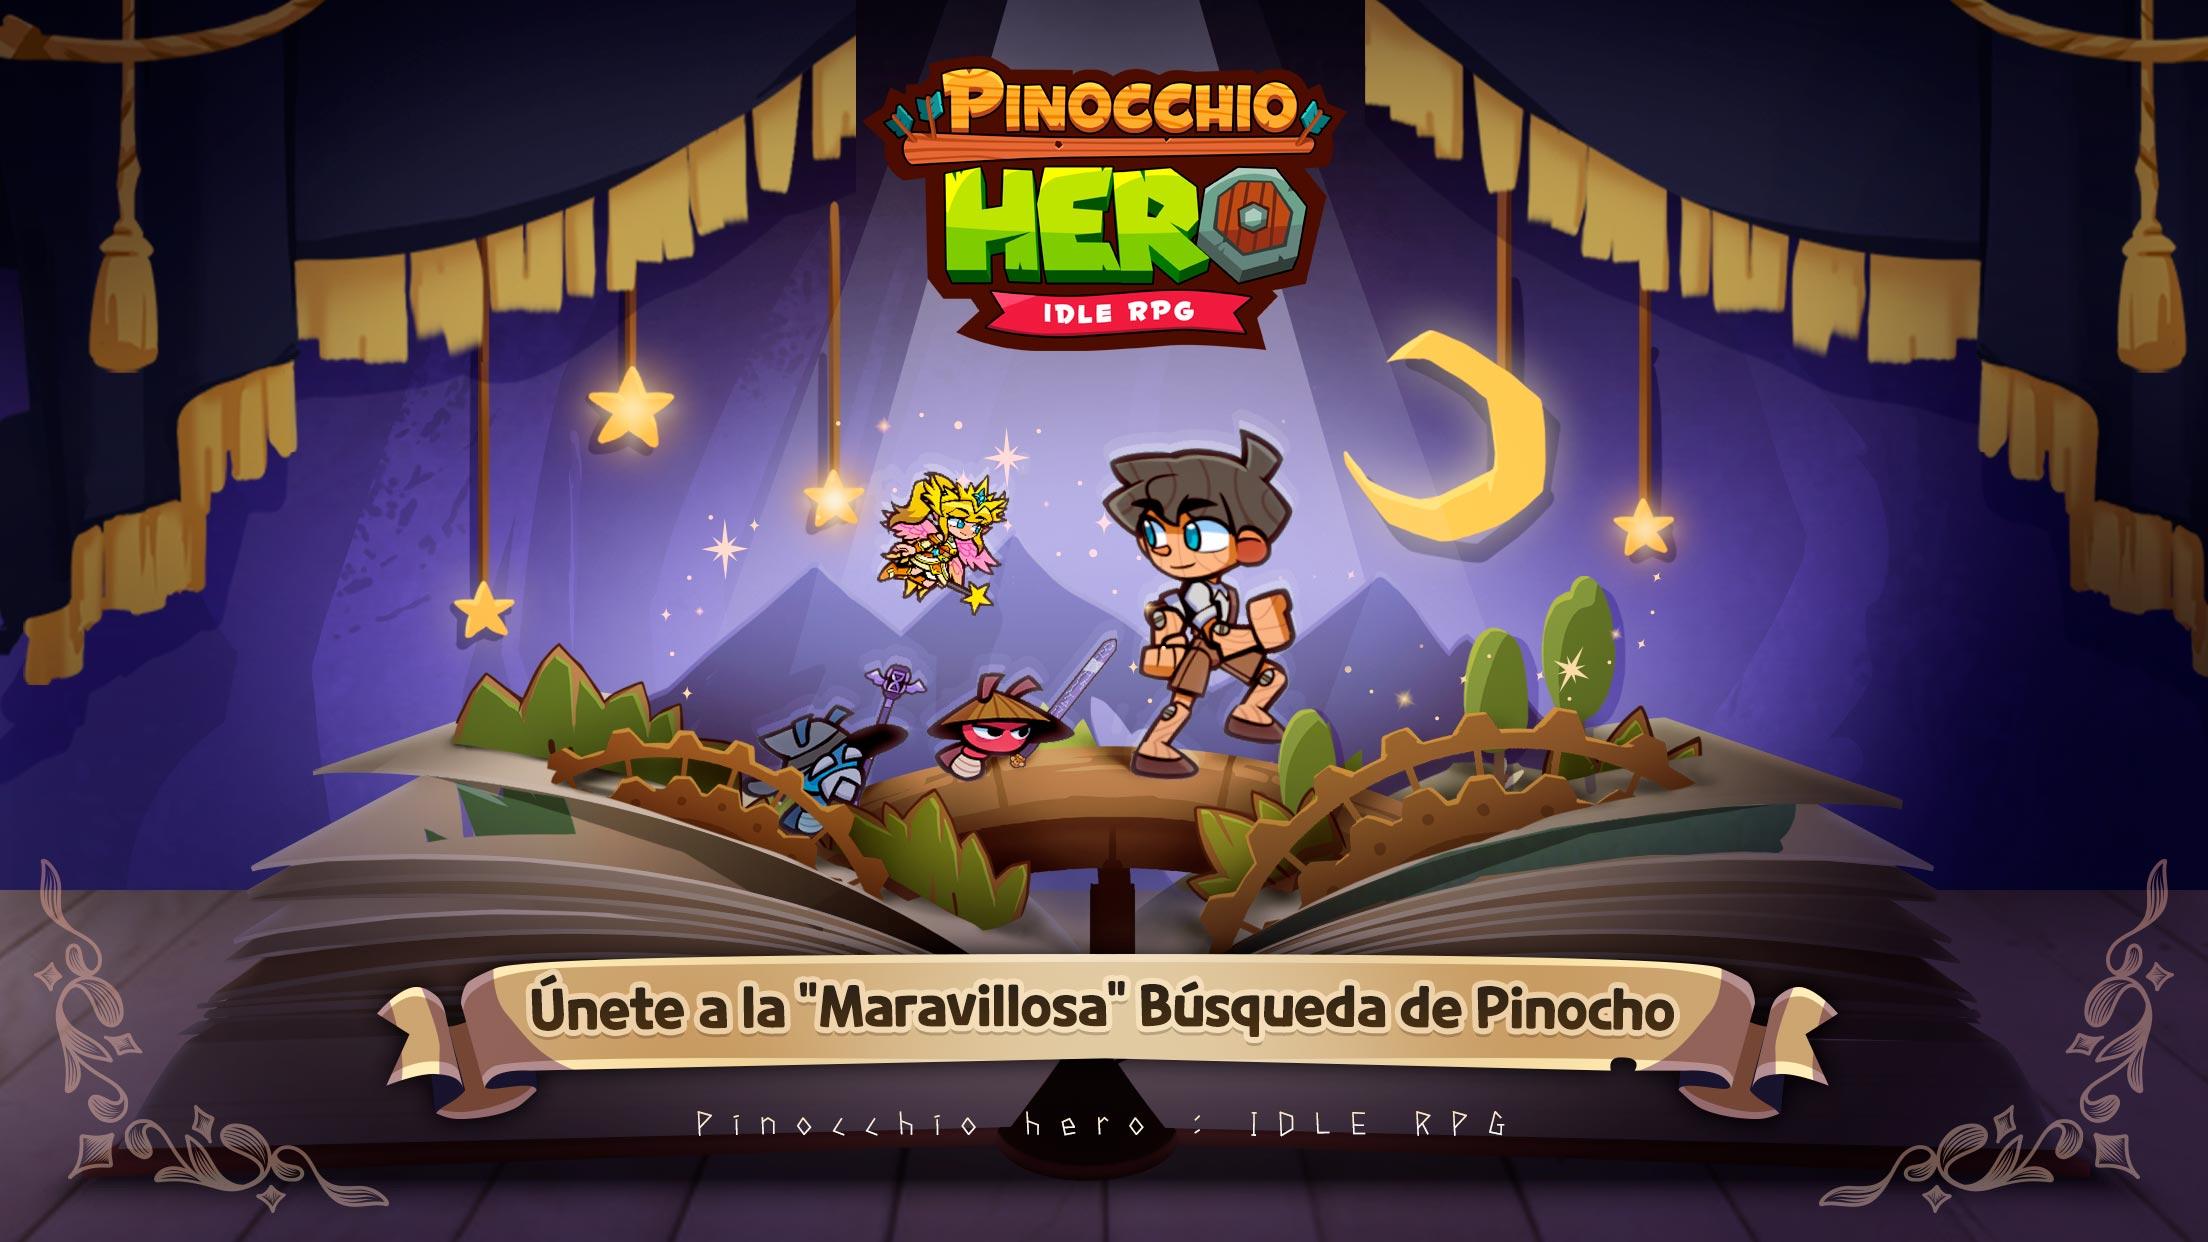 Screenshot 1 of Pinocchio Héroe RPG INACTIVO 1.0.10